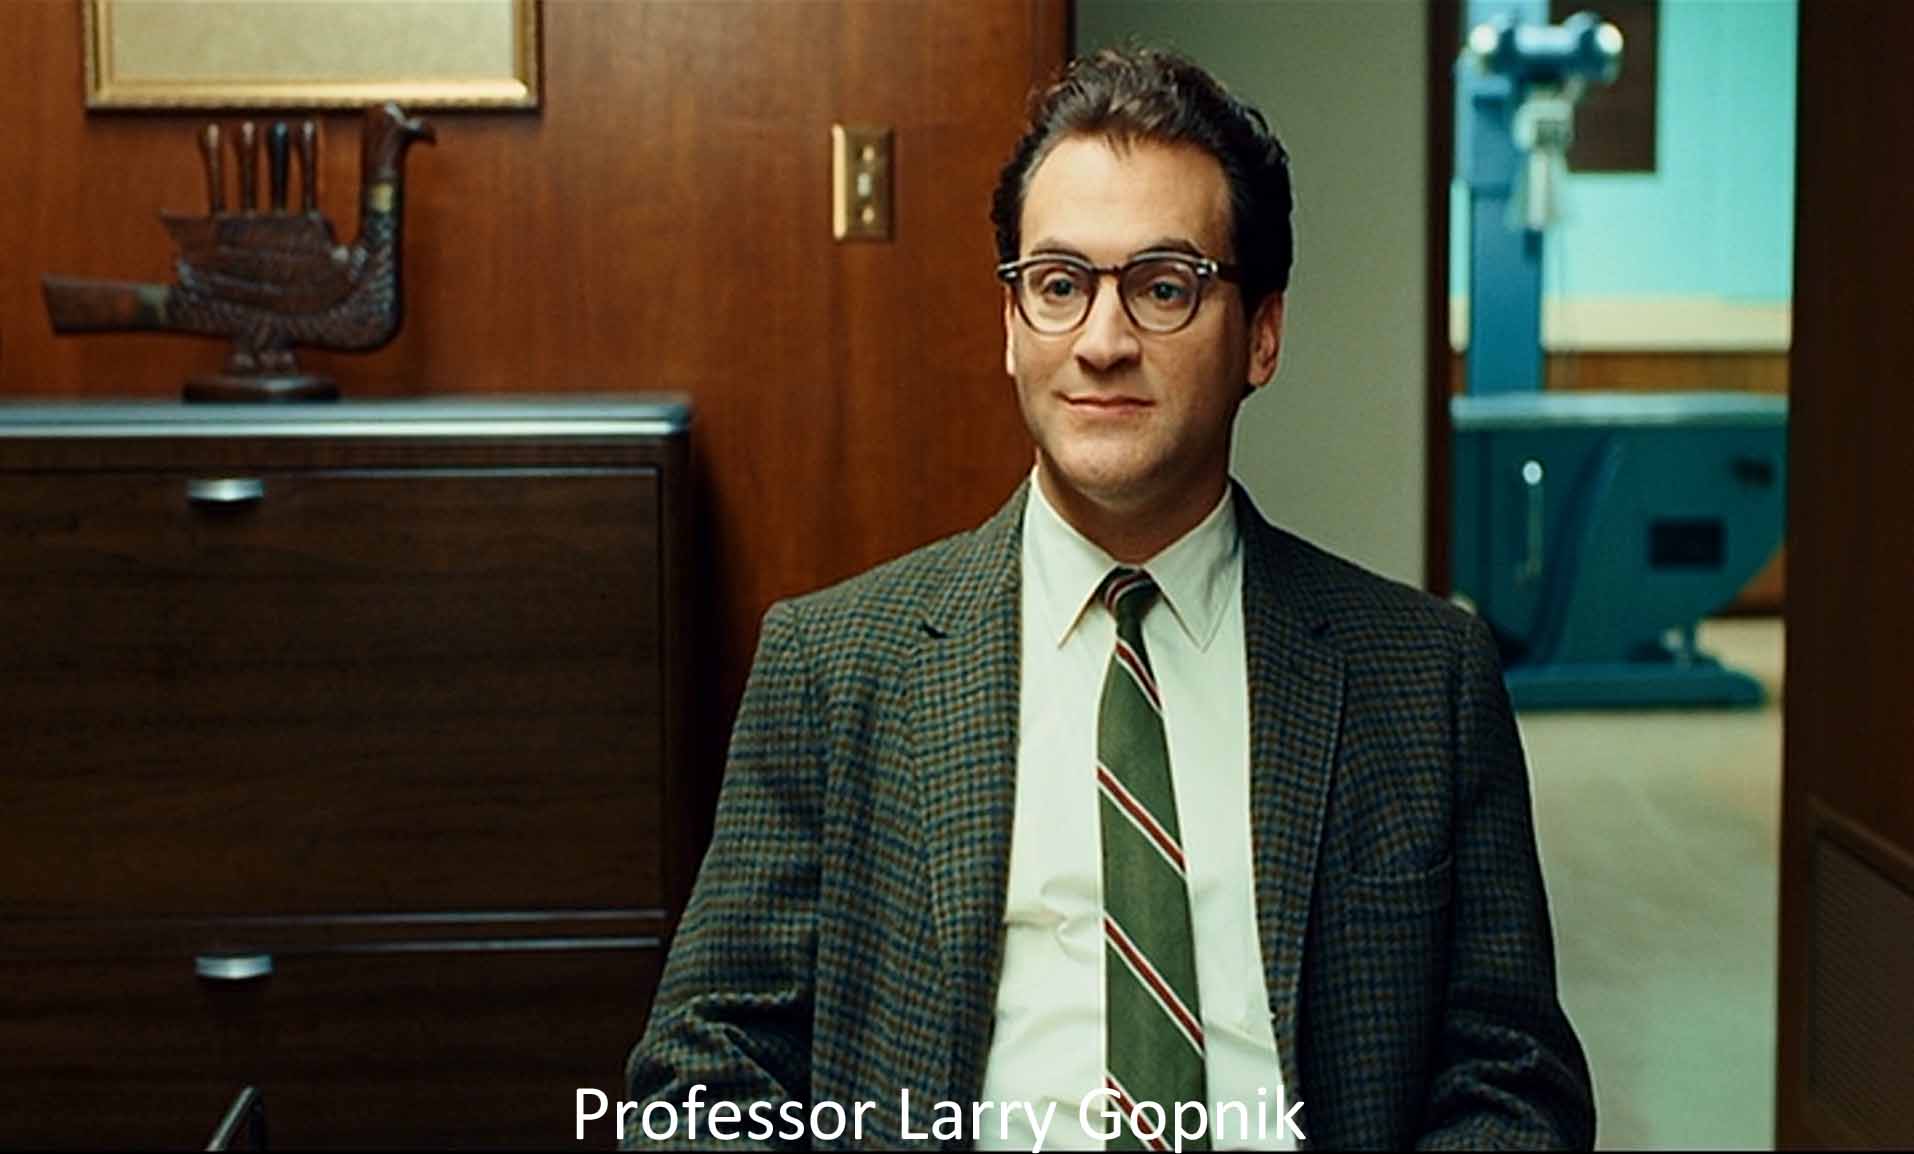 Professor Larry Gopnik